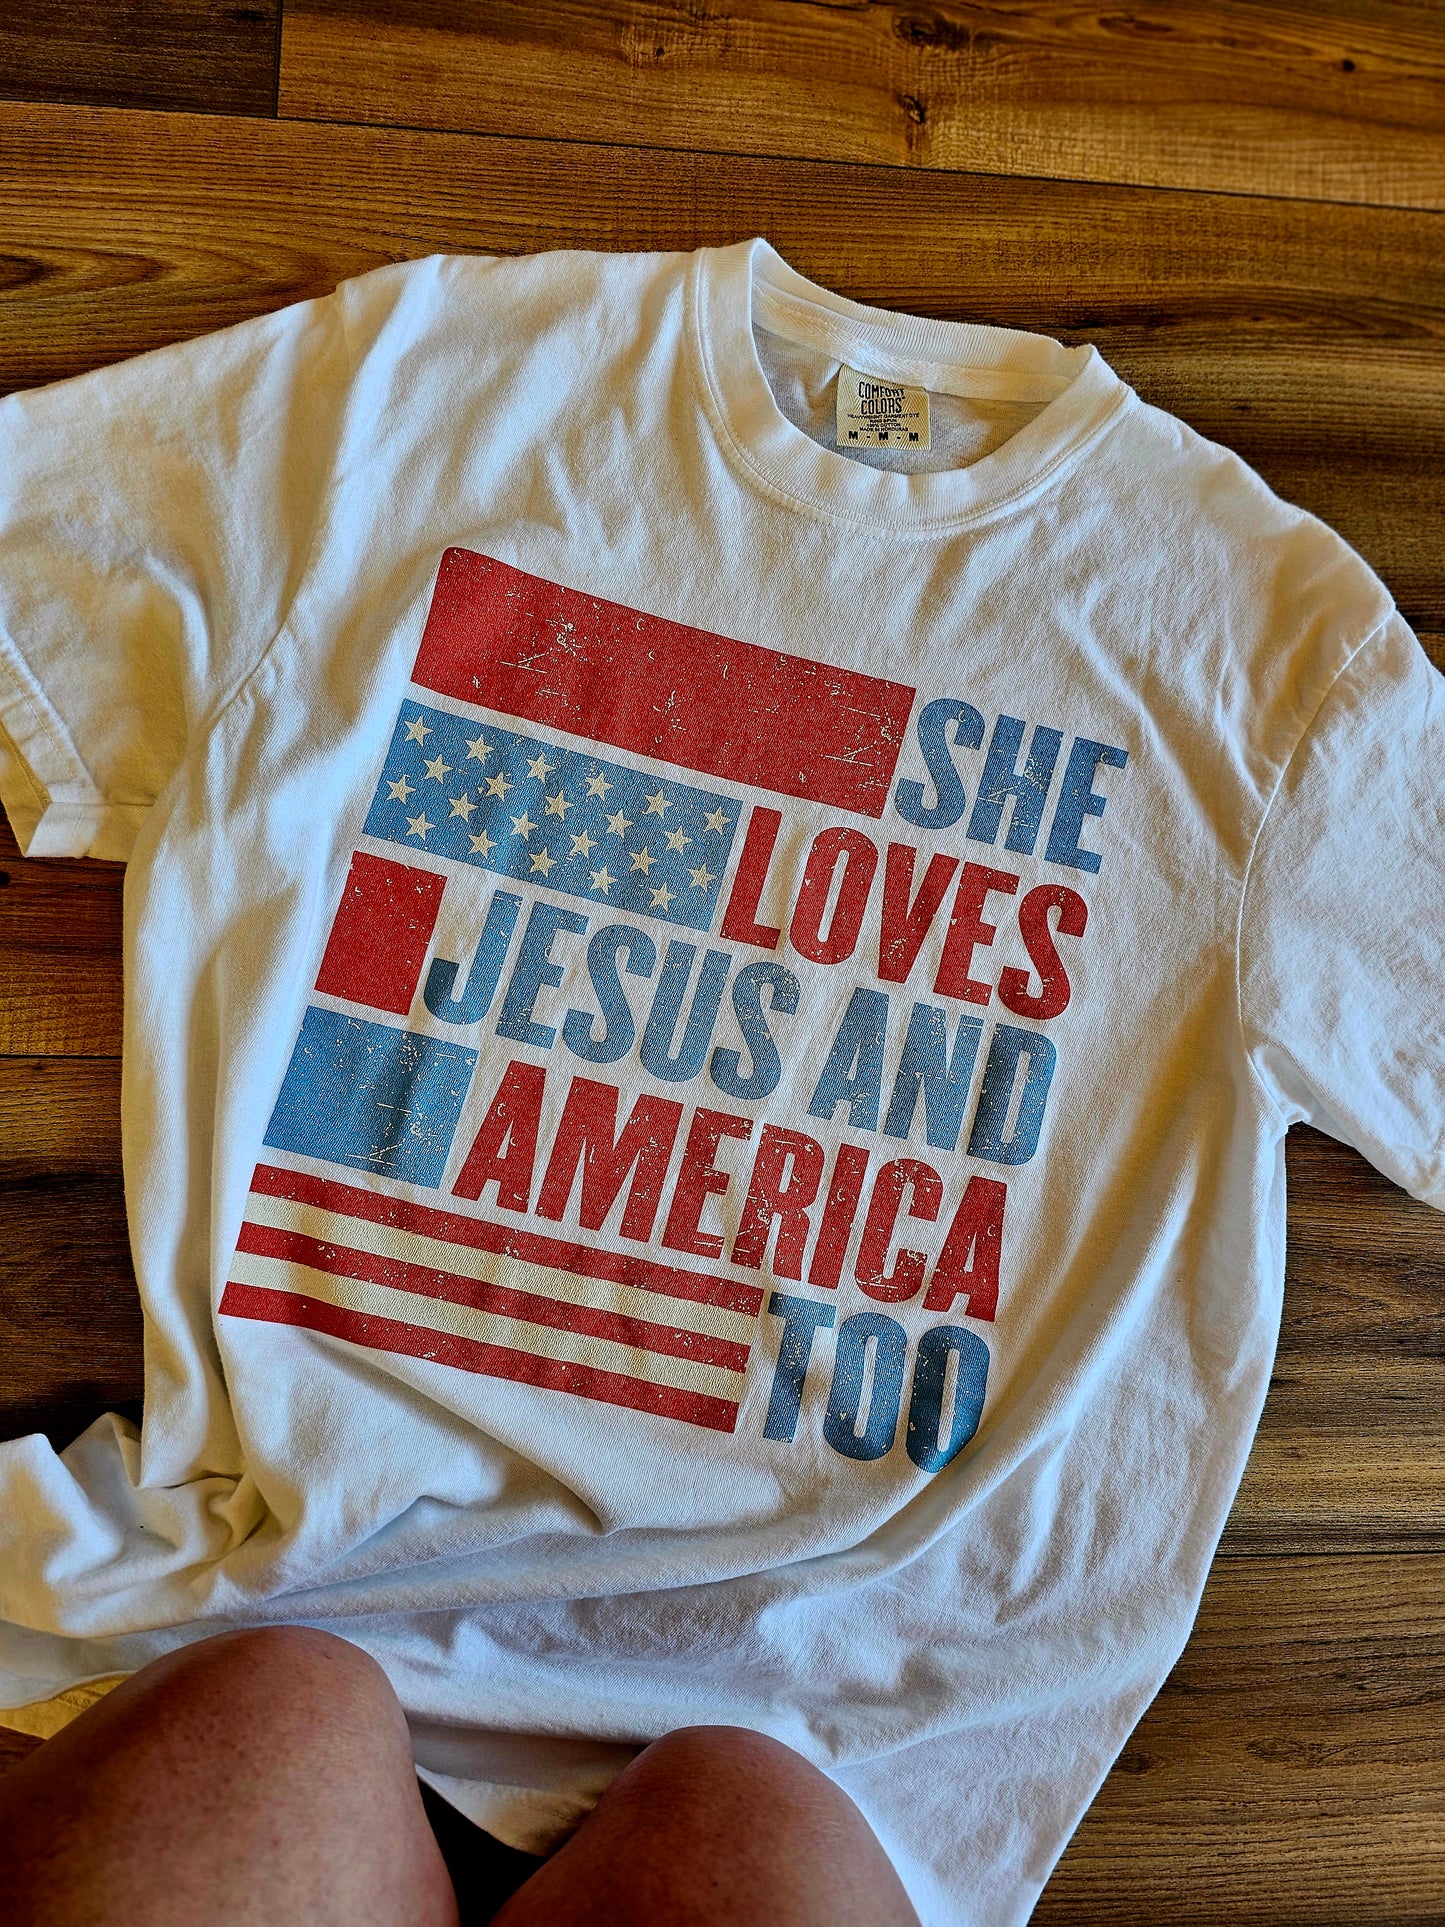 She Loves Jesus & America Too Tee